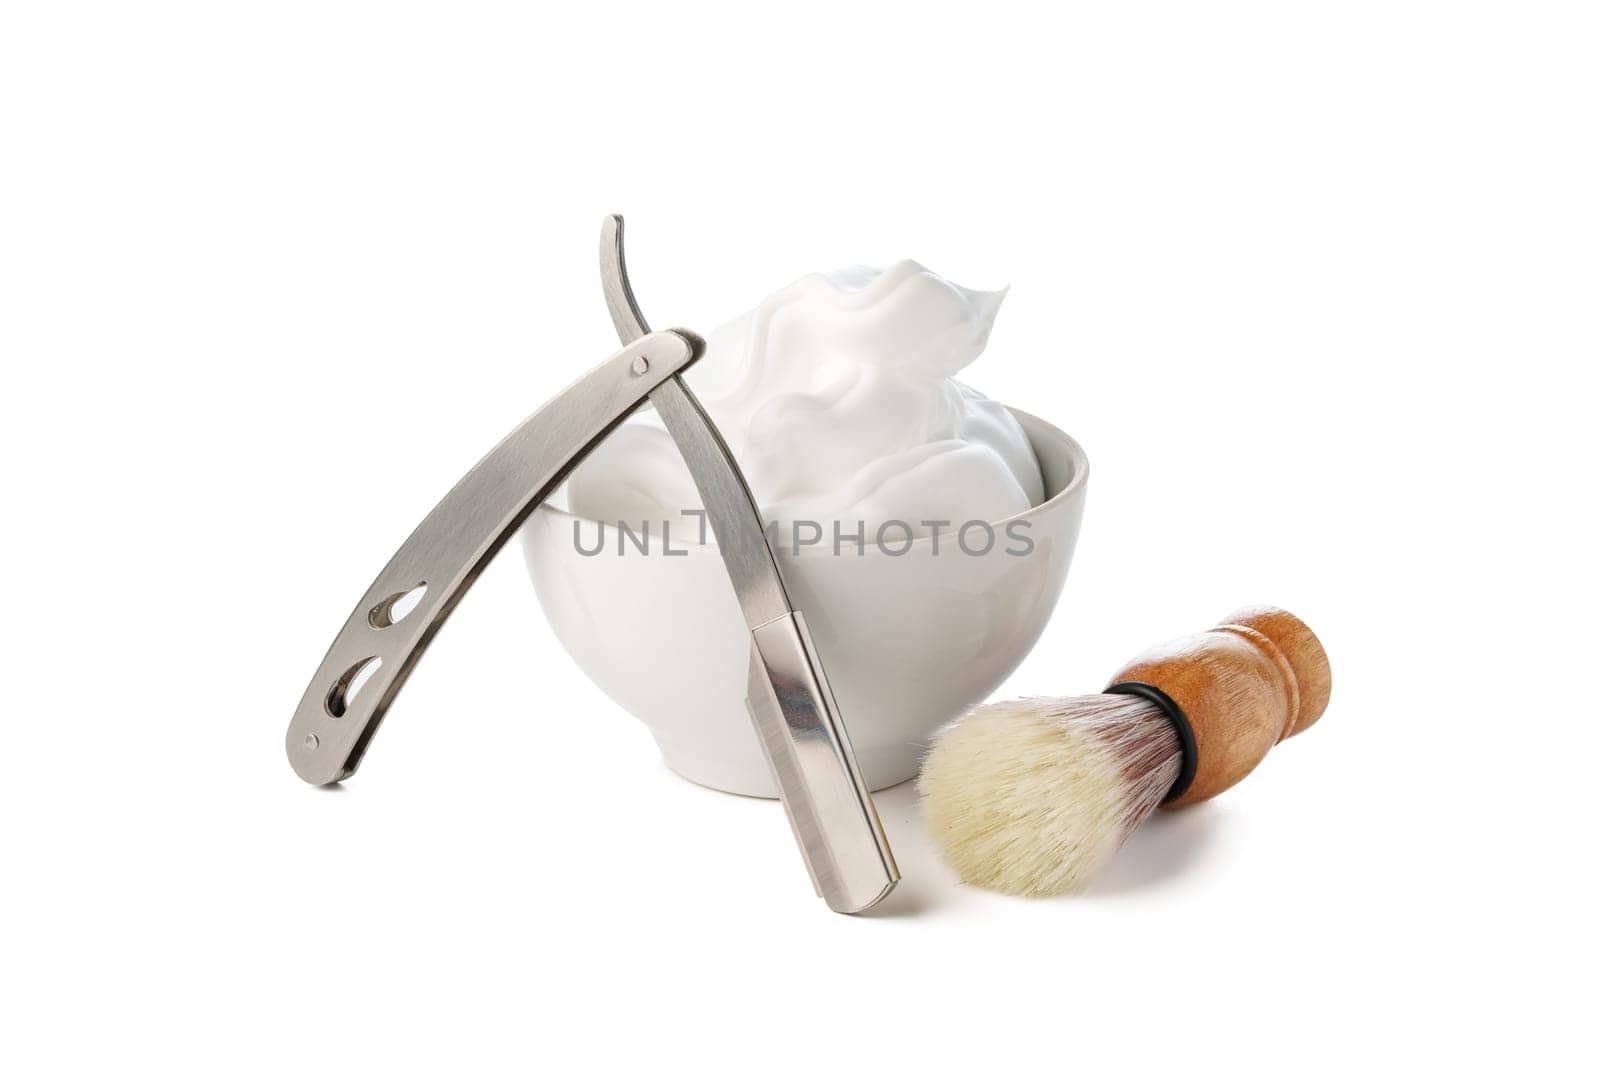 Vintage shaving razor and tools isolated on white background